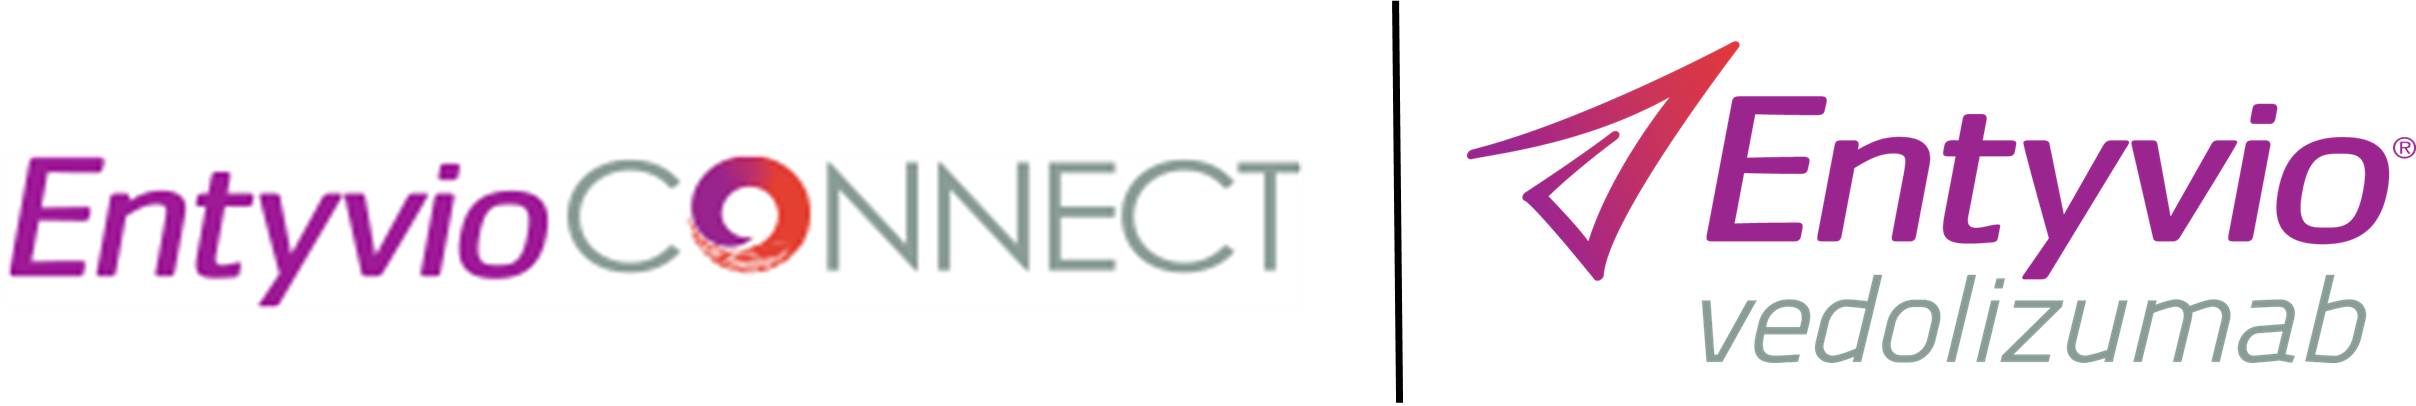 Entyvio_Connect_Logo_RGB@1x.png